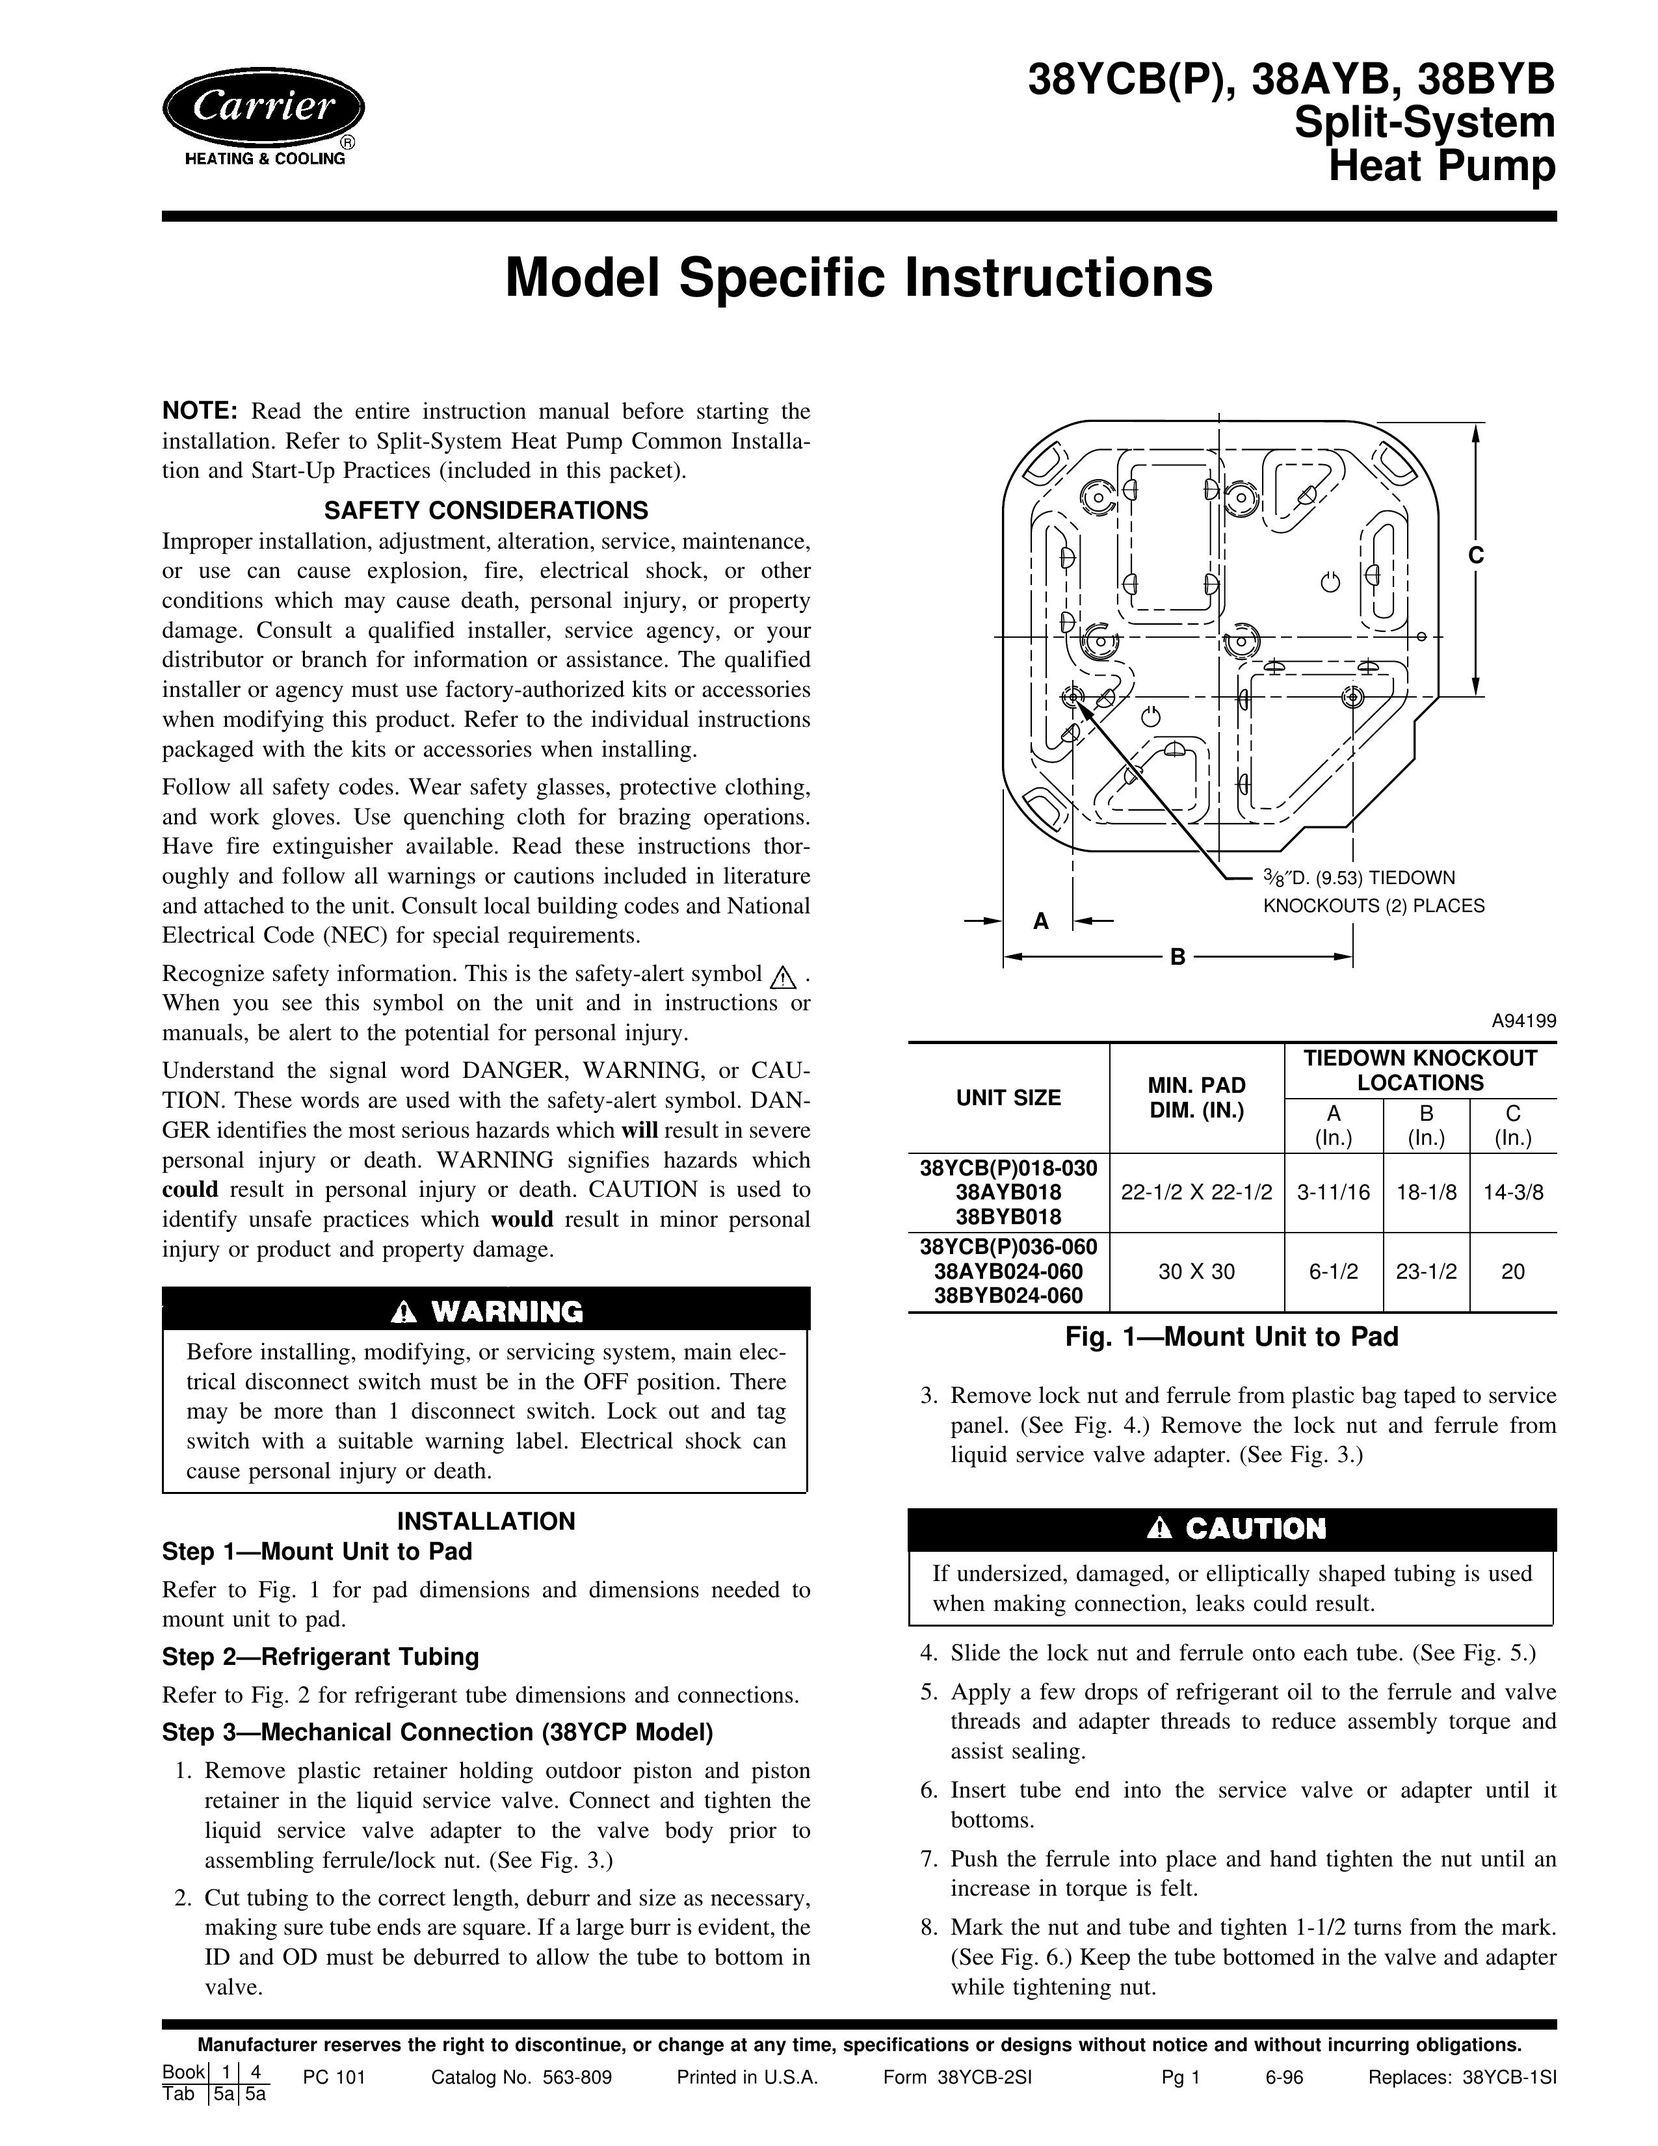 Carrier 38YCB(P) Heat Pump User Manual